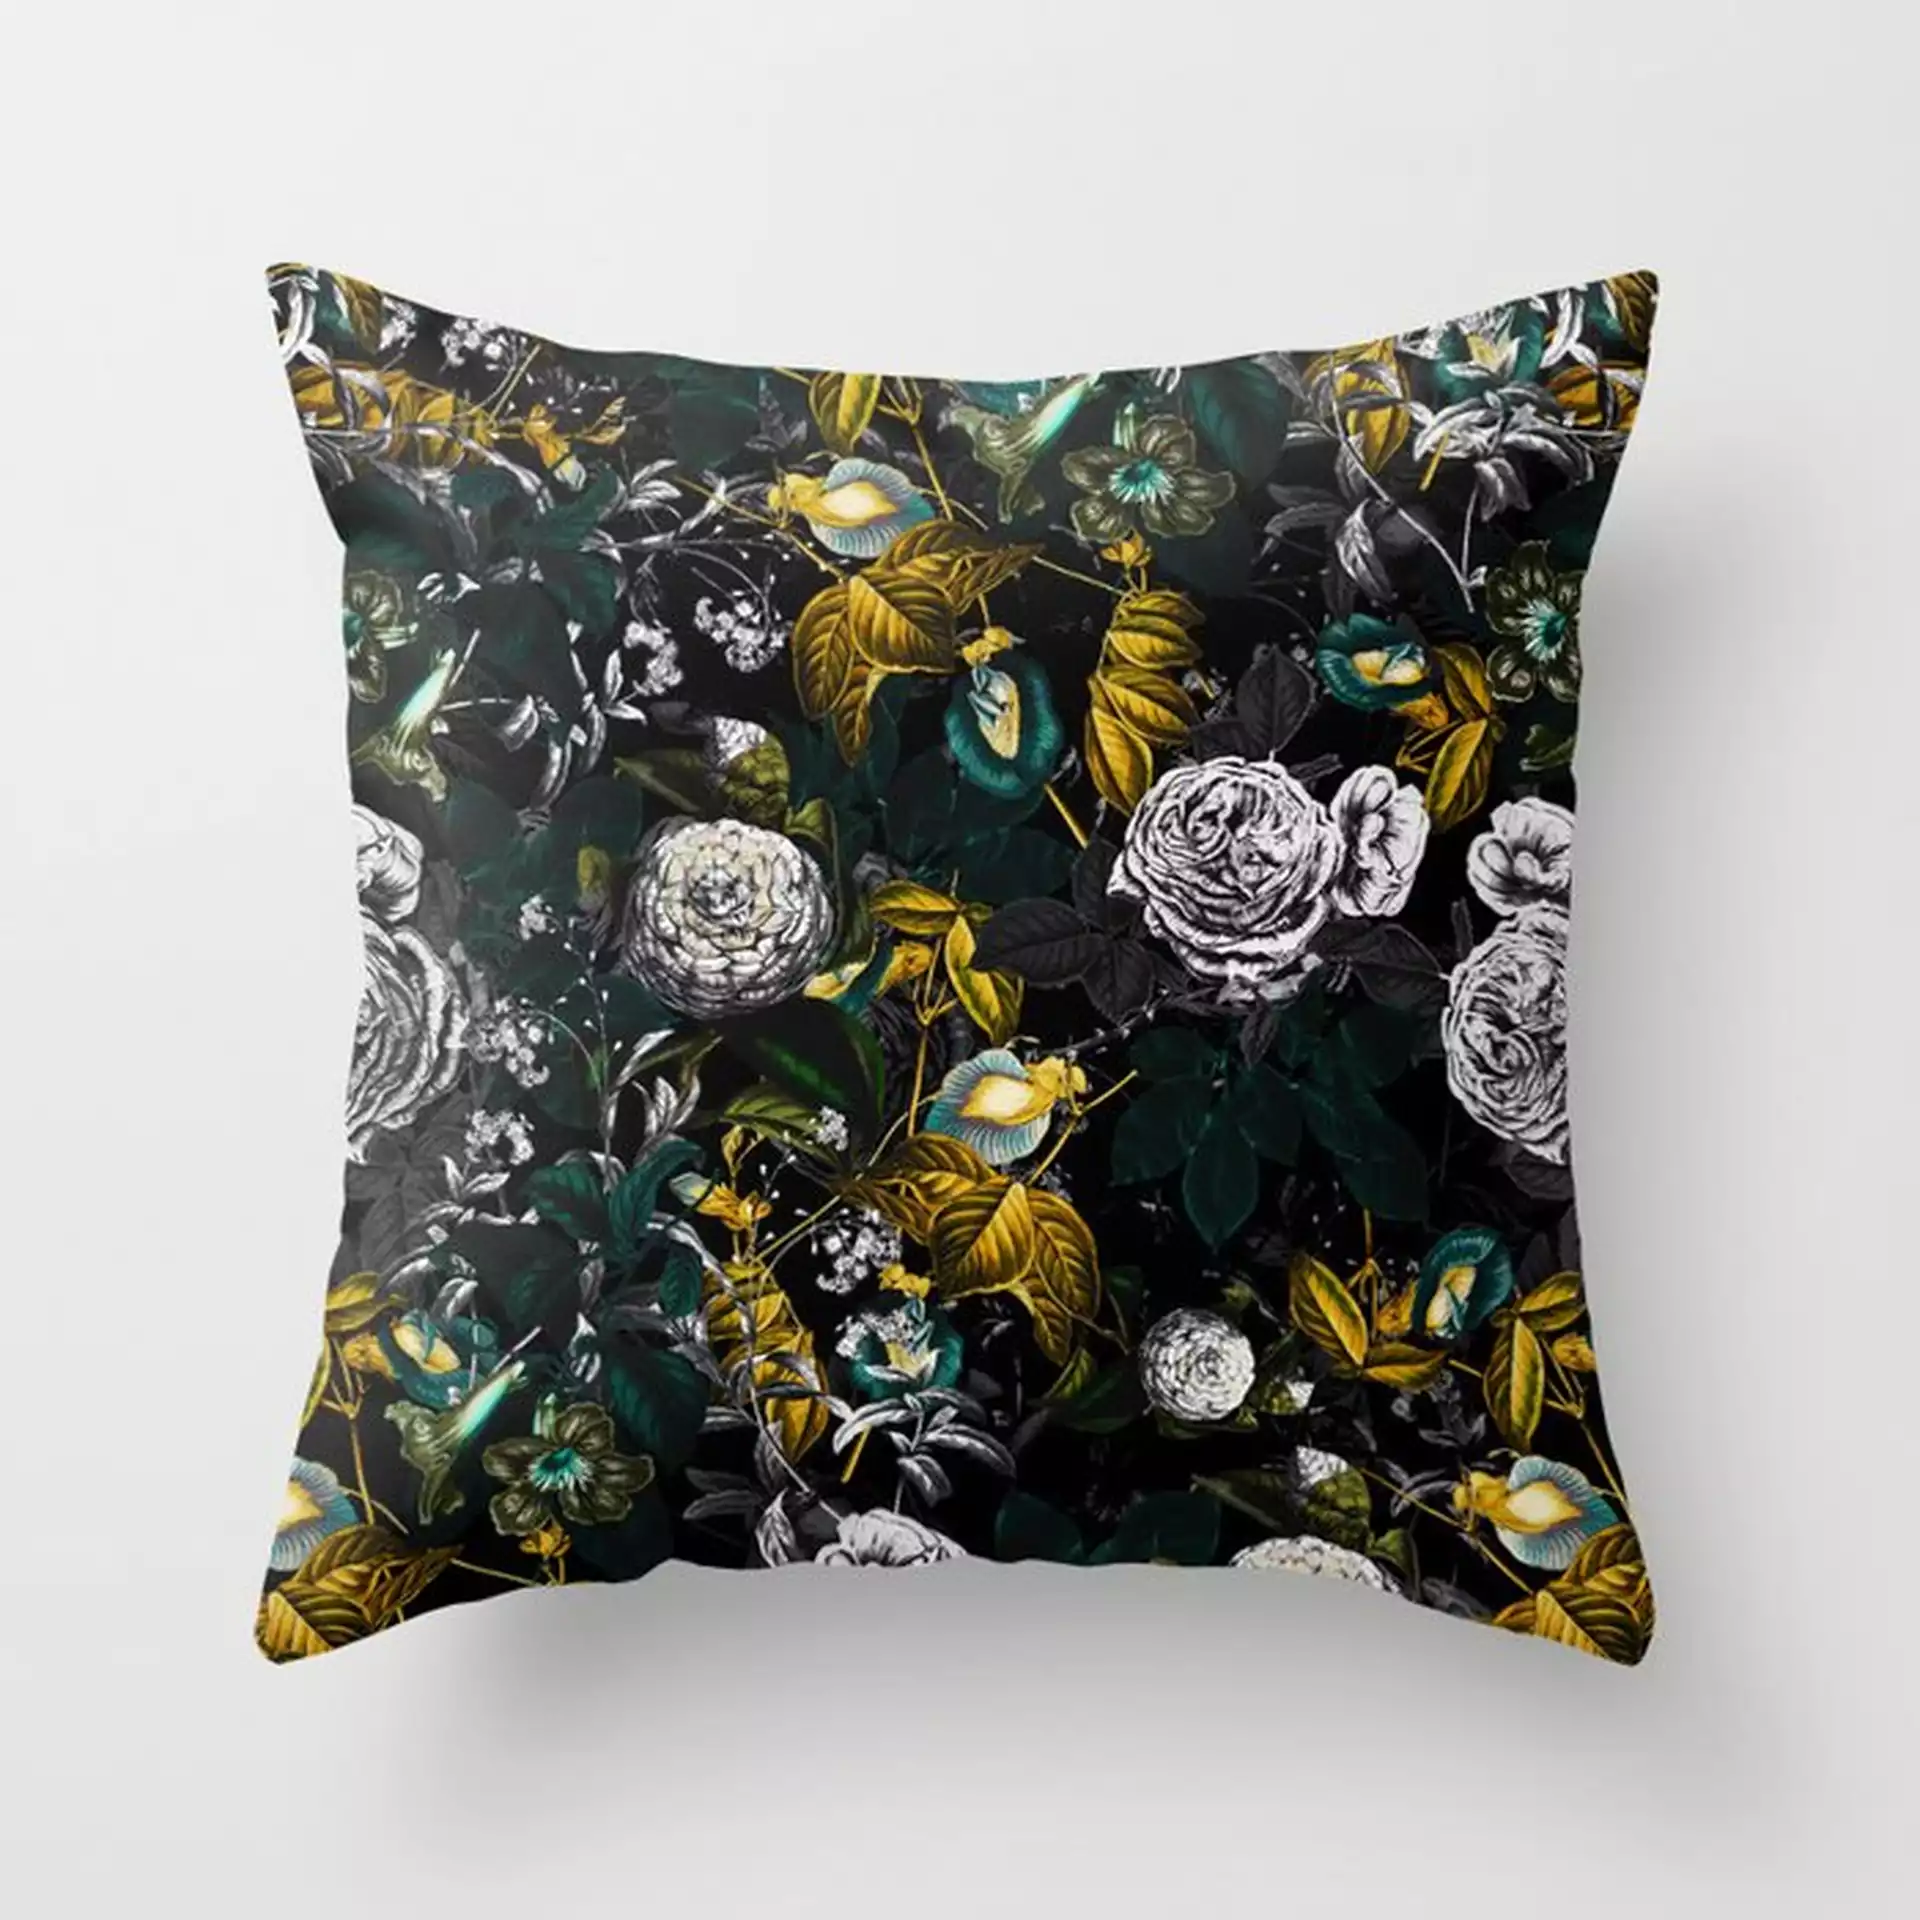 Exotic Garden - Night Couch Throw Pillow by Burcu Korkmazyurek - Cover (24" x 24") with pillow insert - Indoor Pillow